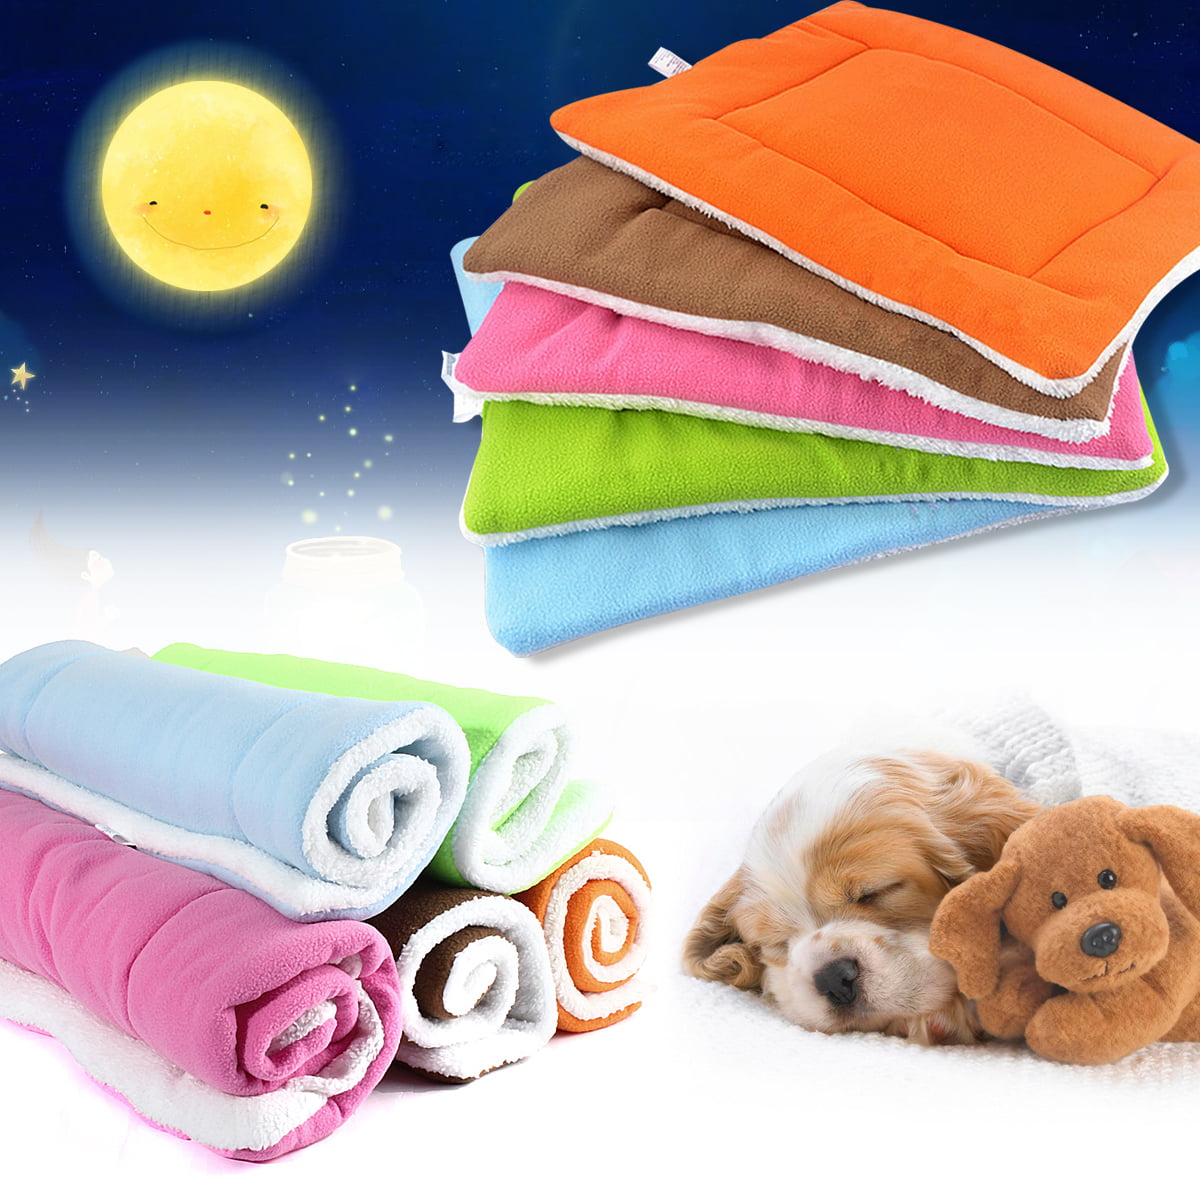 Pet Bed Cushion Mat Pad Dog Cat Kennel Crate Warm Cozy Soft Blanket S M L XL US 